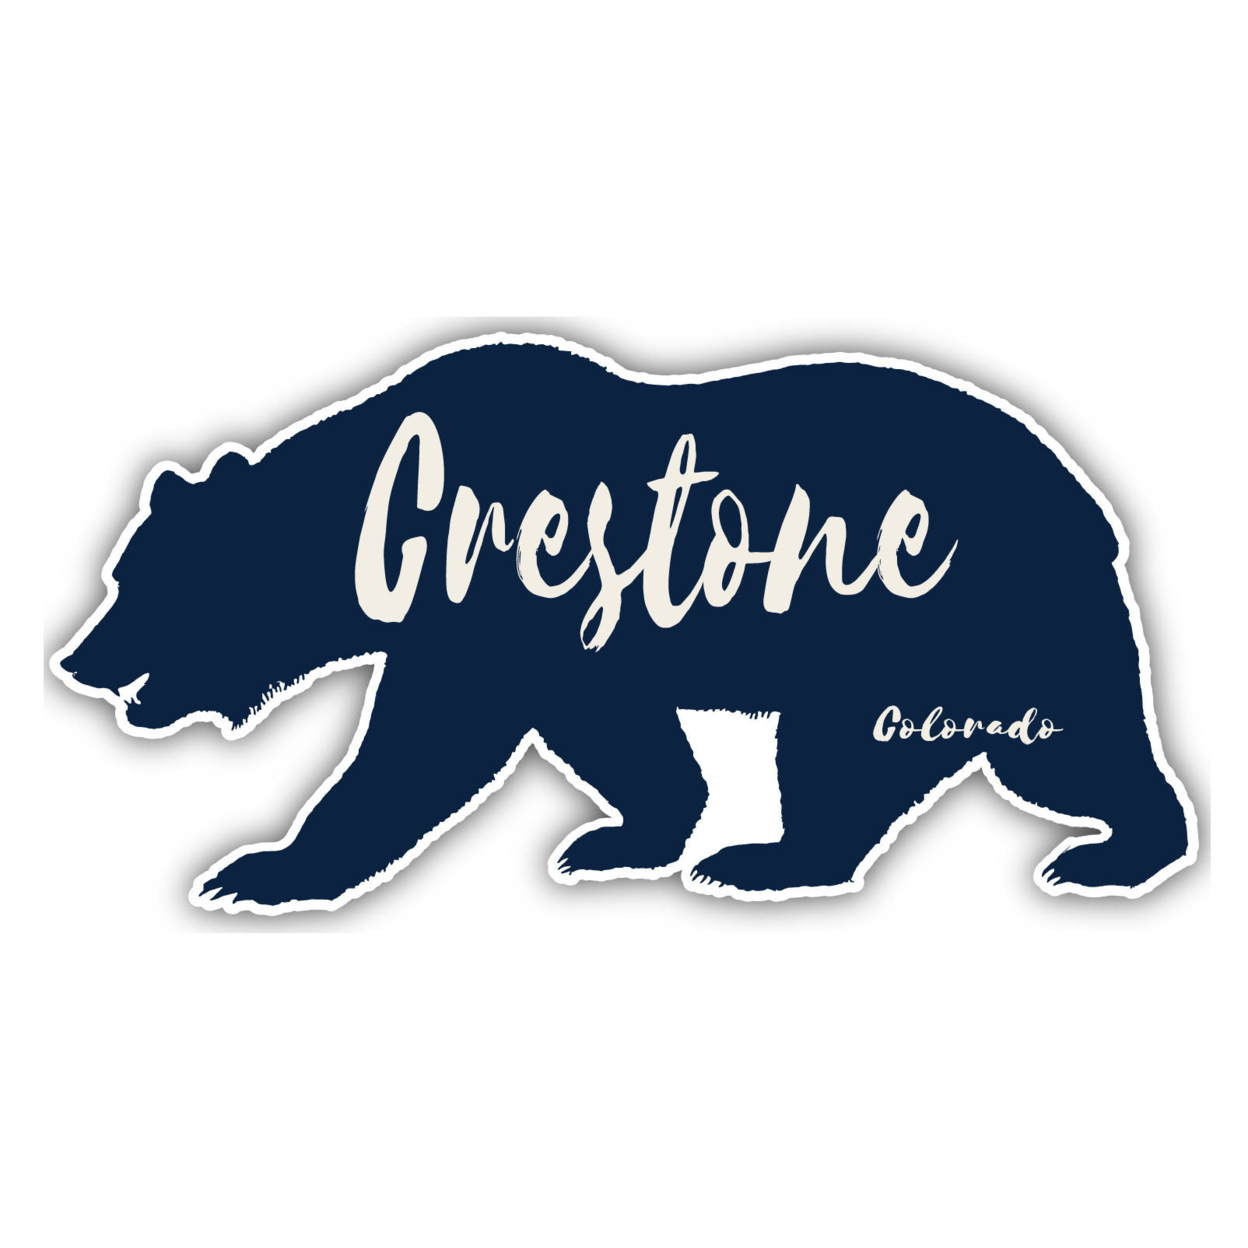 Crestone Colorado Souvenir Decorative Stickers (Choose Theme And Size) - Single Unit, 6-Inch, Camp Life